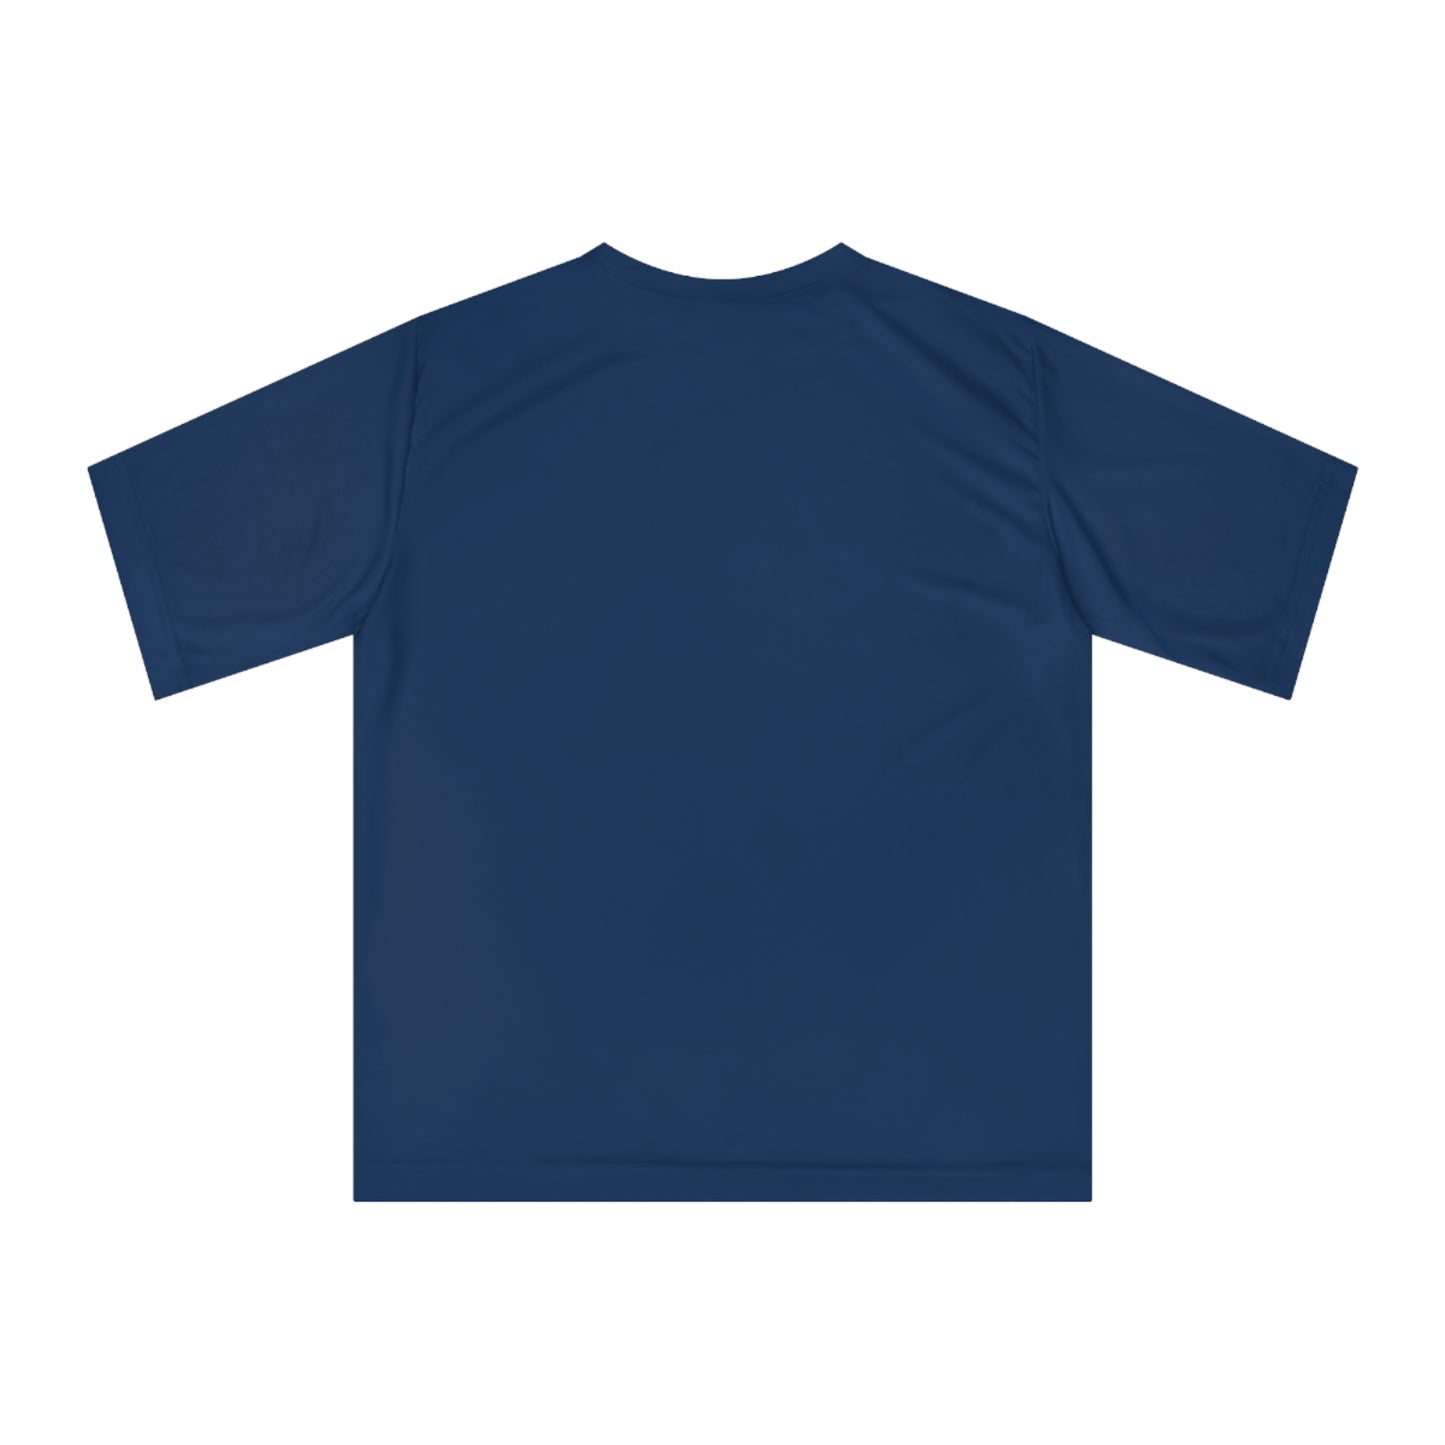 Soccer Cutout - Team 365 Unisex Zone Performance T-shirt